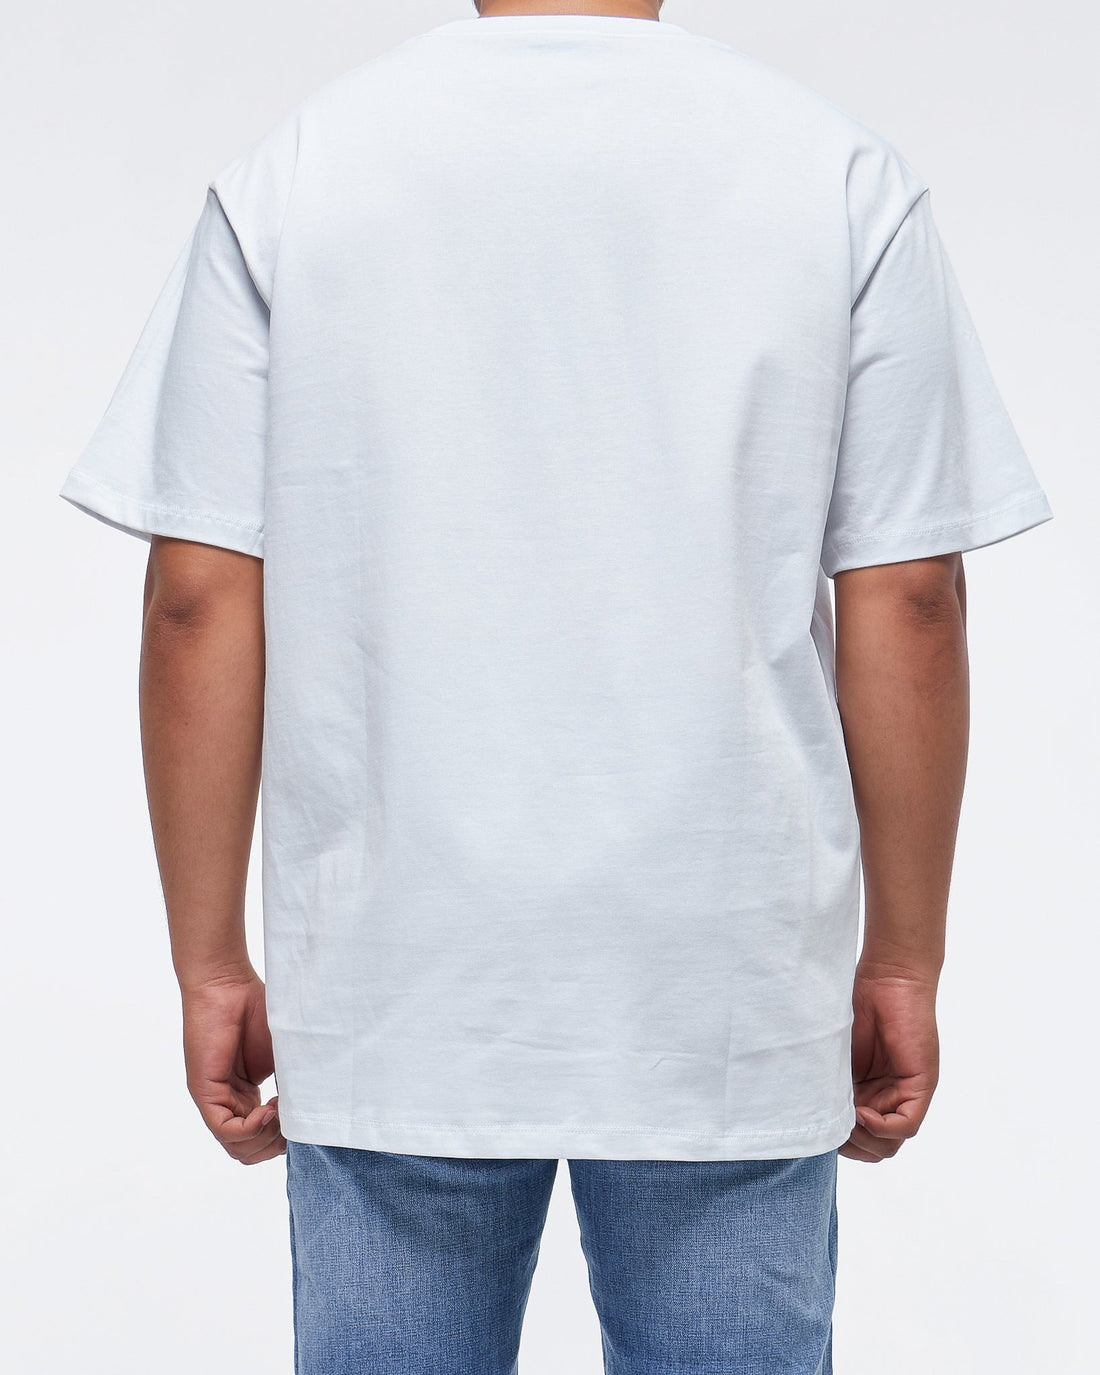 MOI OUTFIT-Teddy Bear Printed Unisex T-Shirt 22.90